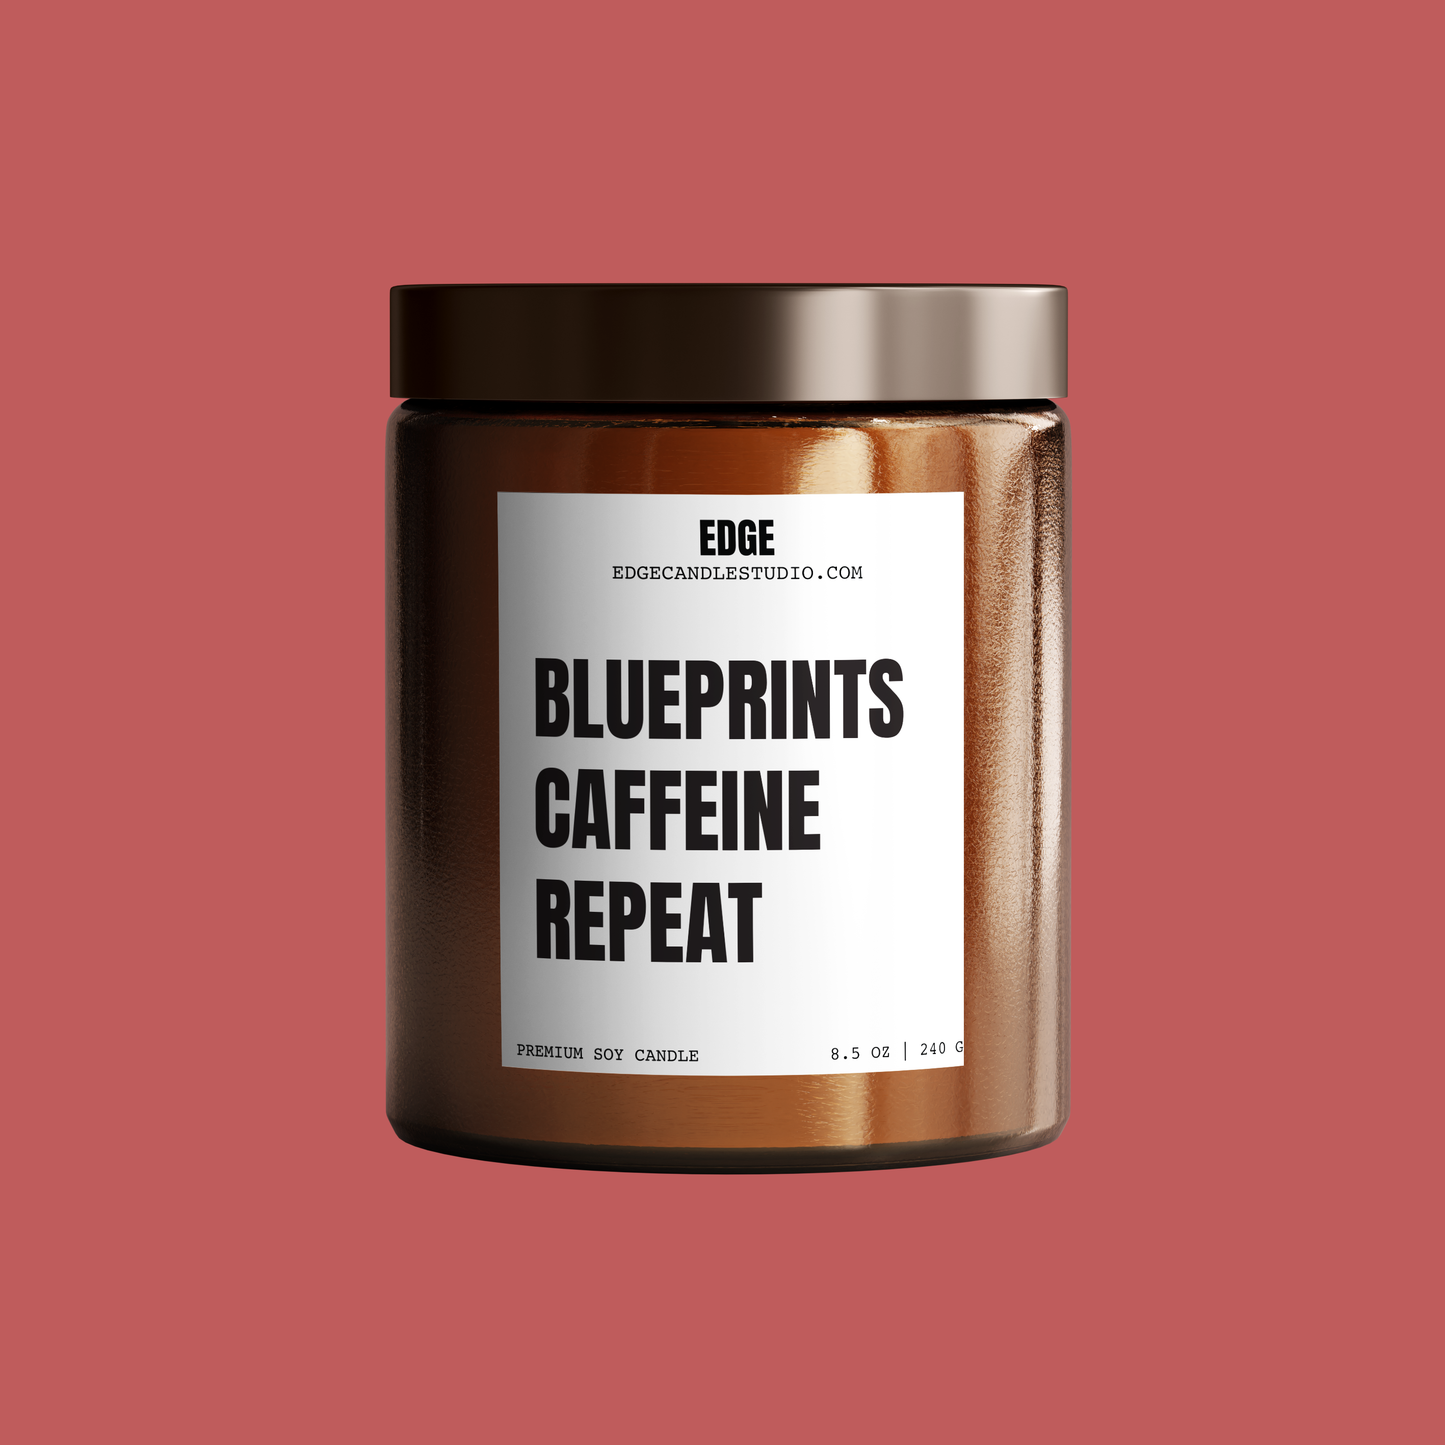 Blueprints, Caffeine, Repeat.